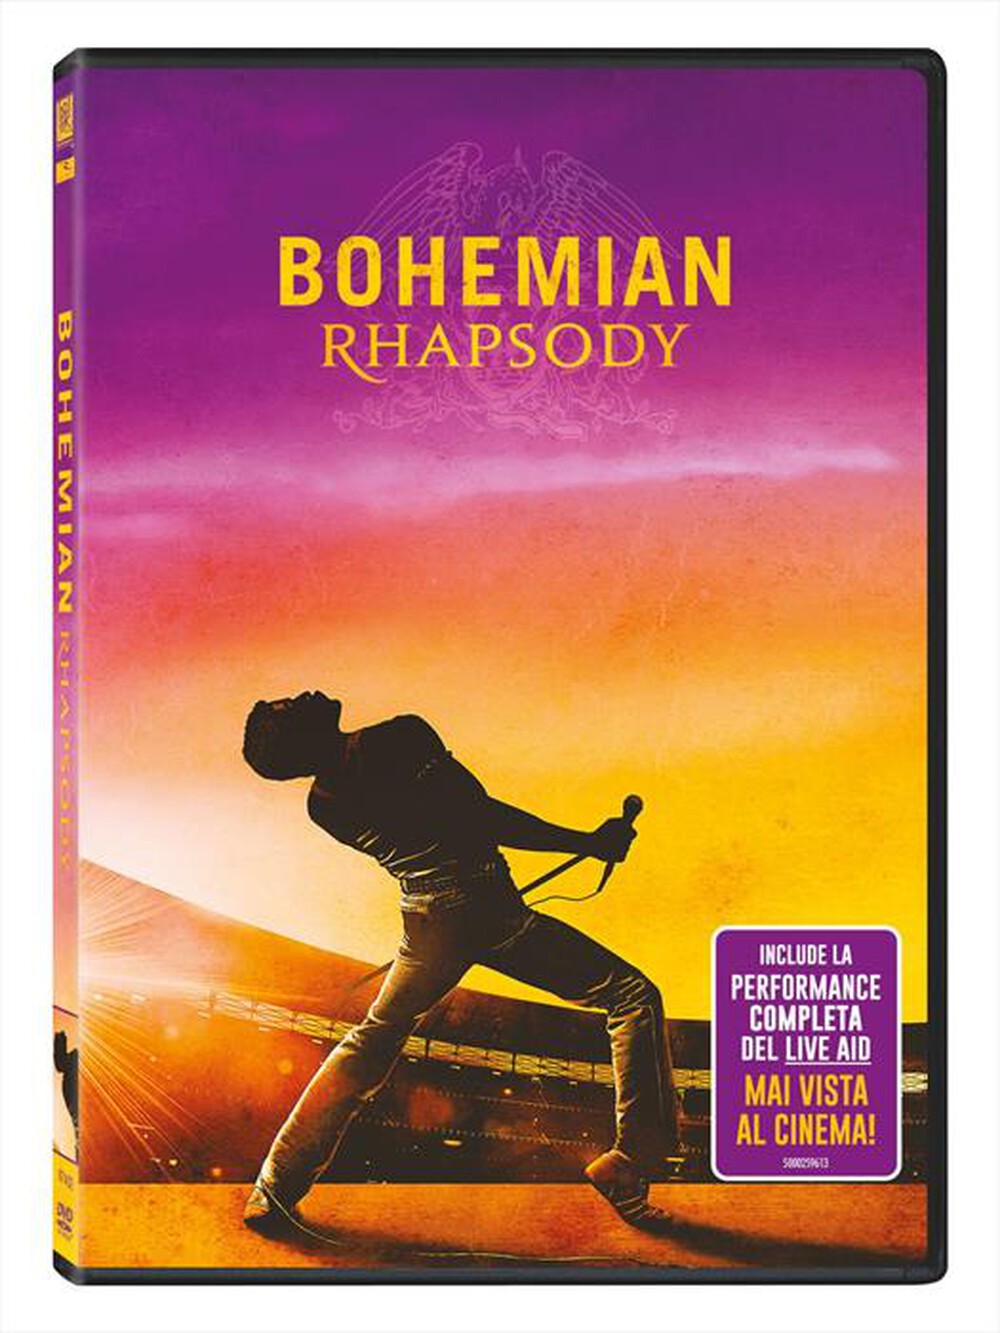 "EAGLE PICTURES - Bohemian Rhapsody"